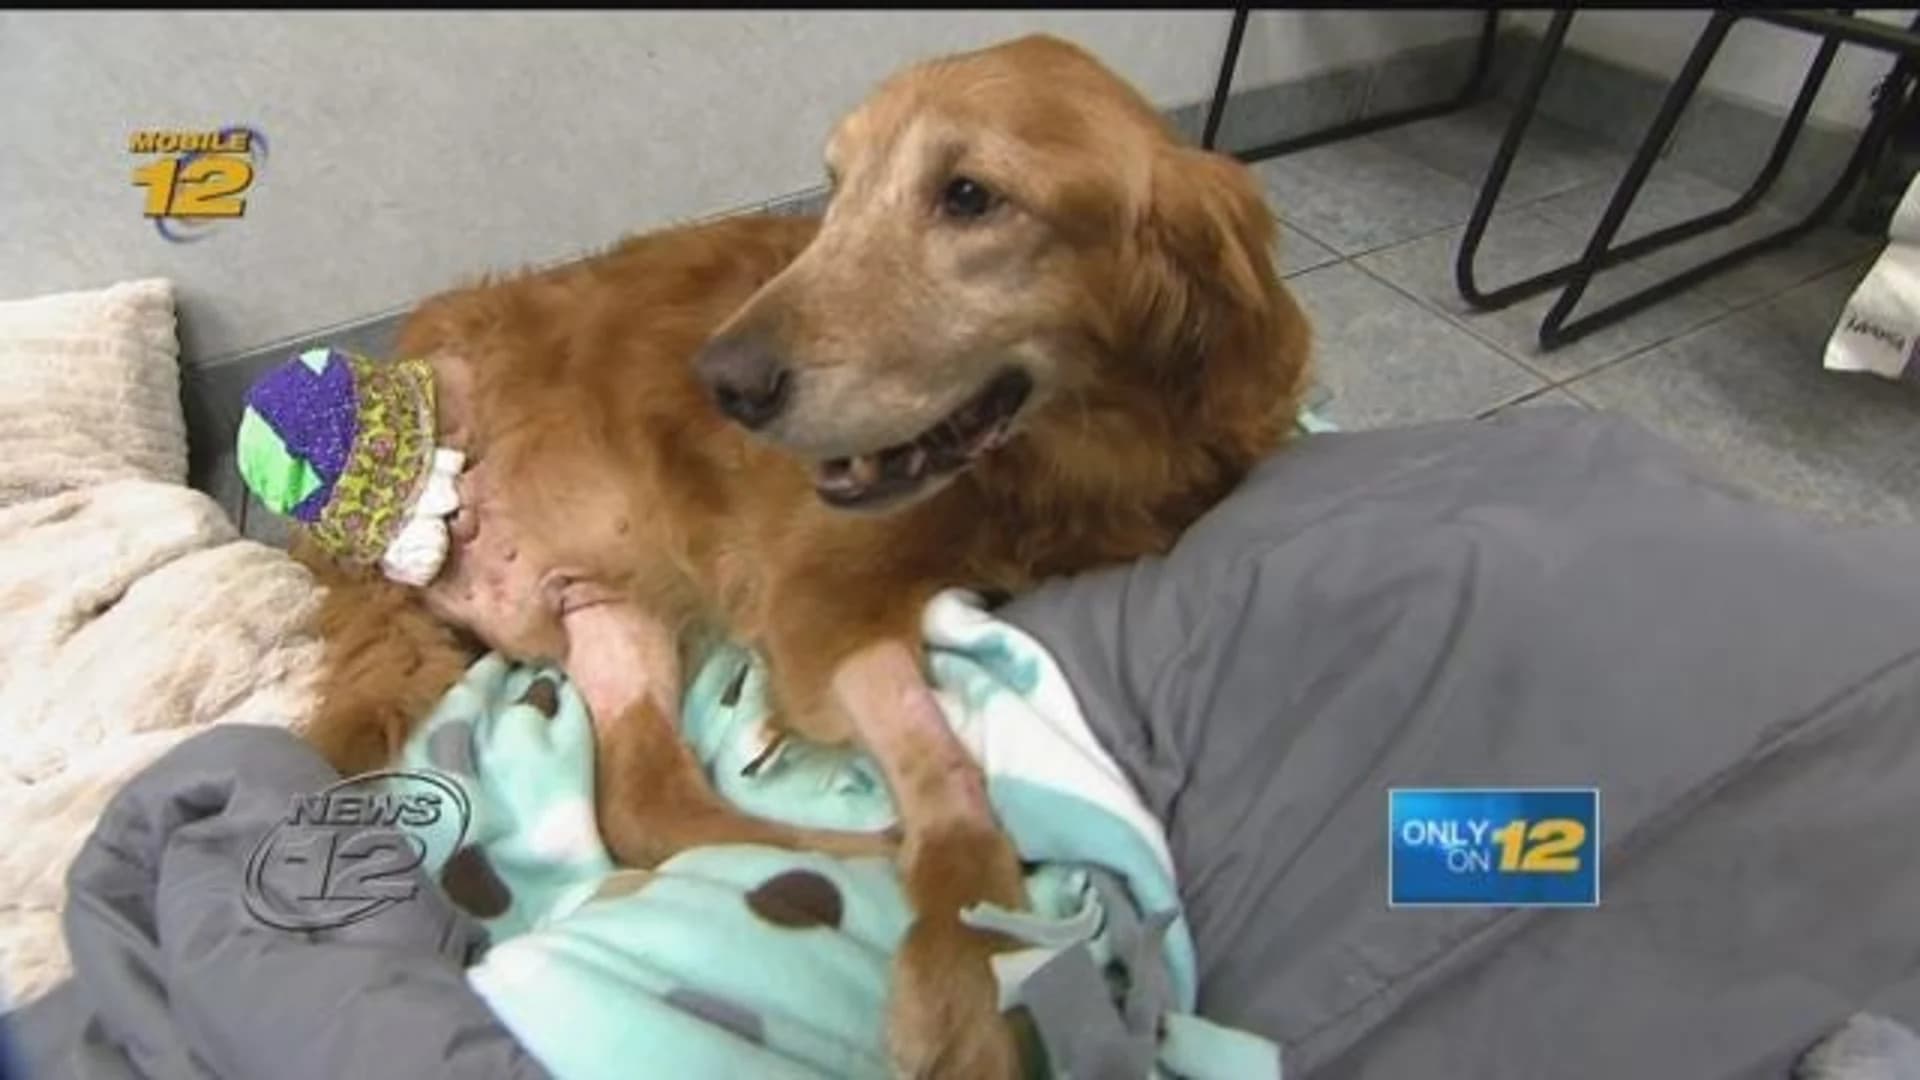 Nonprofit hopes for donations after saving veteran’s dog